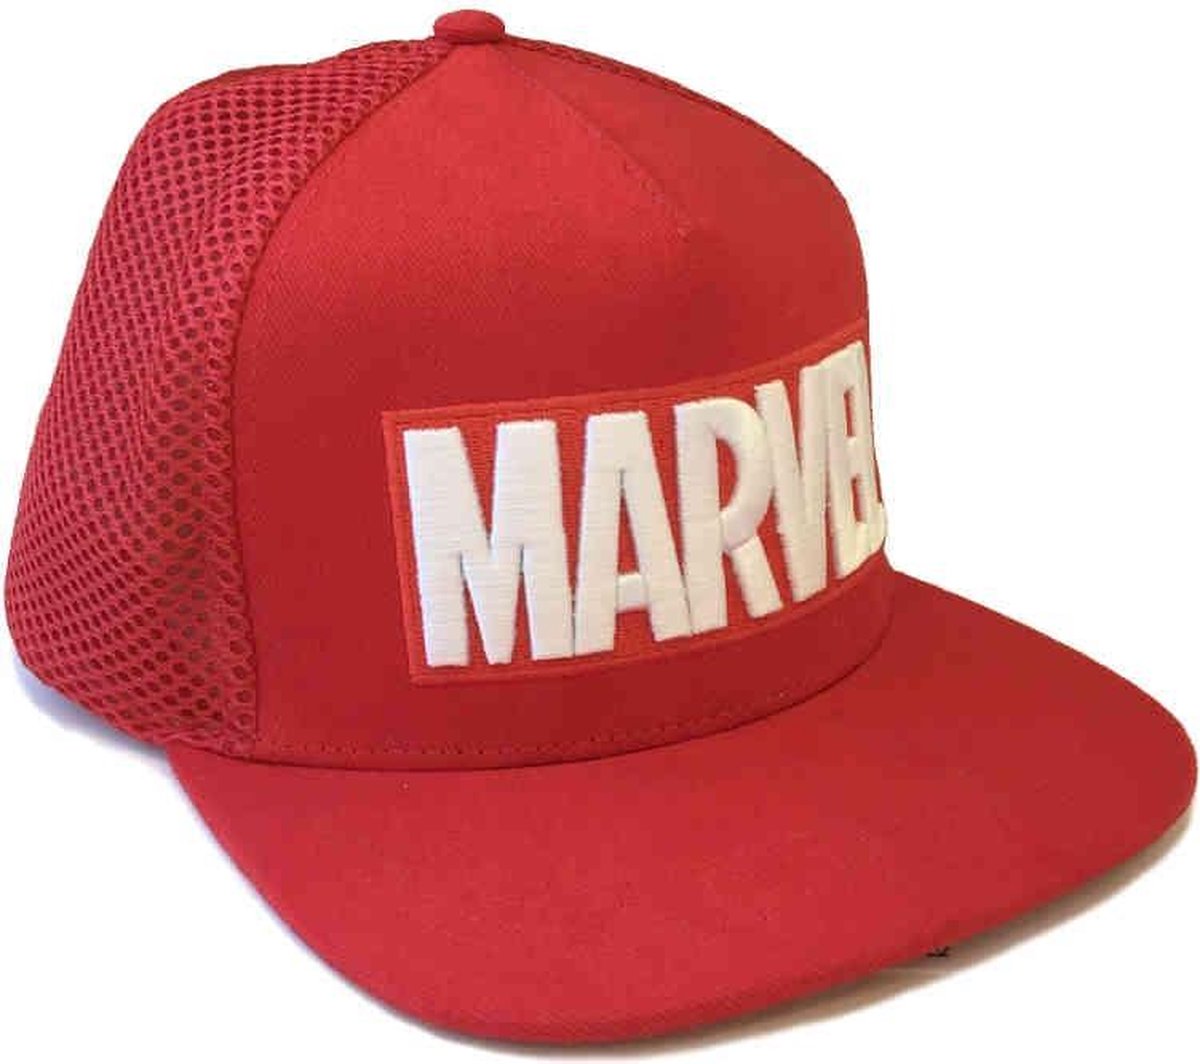 Marvel - Logo Embroidered Snapback Cap Rood